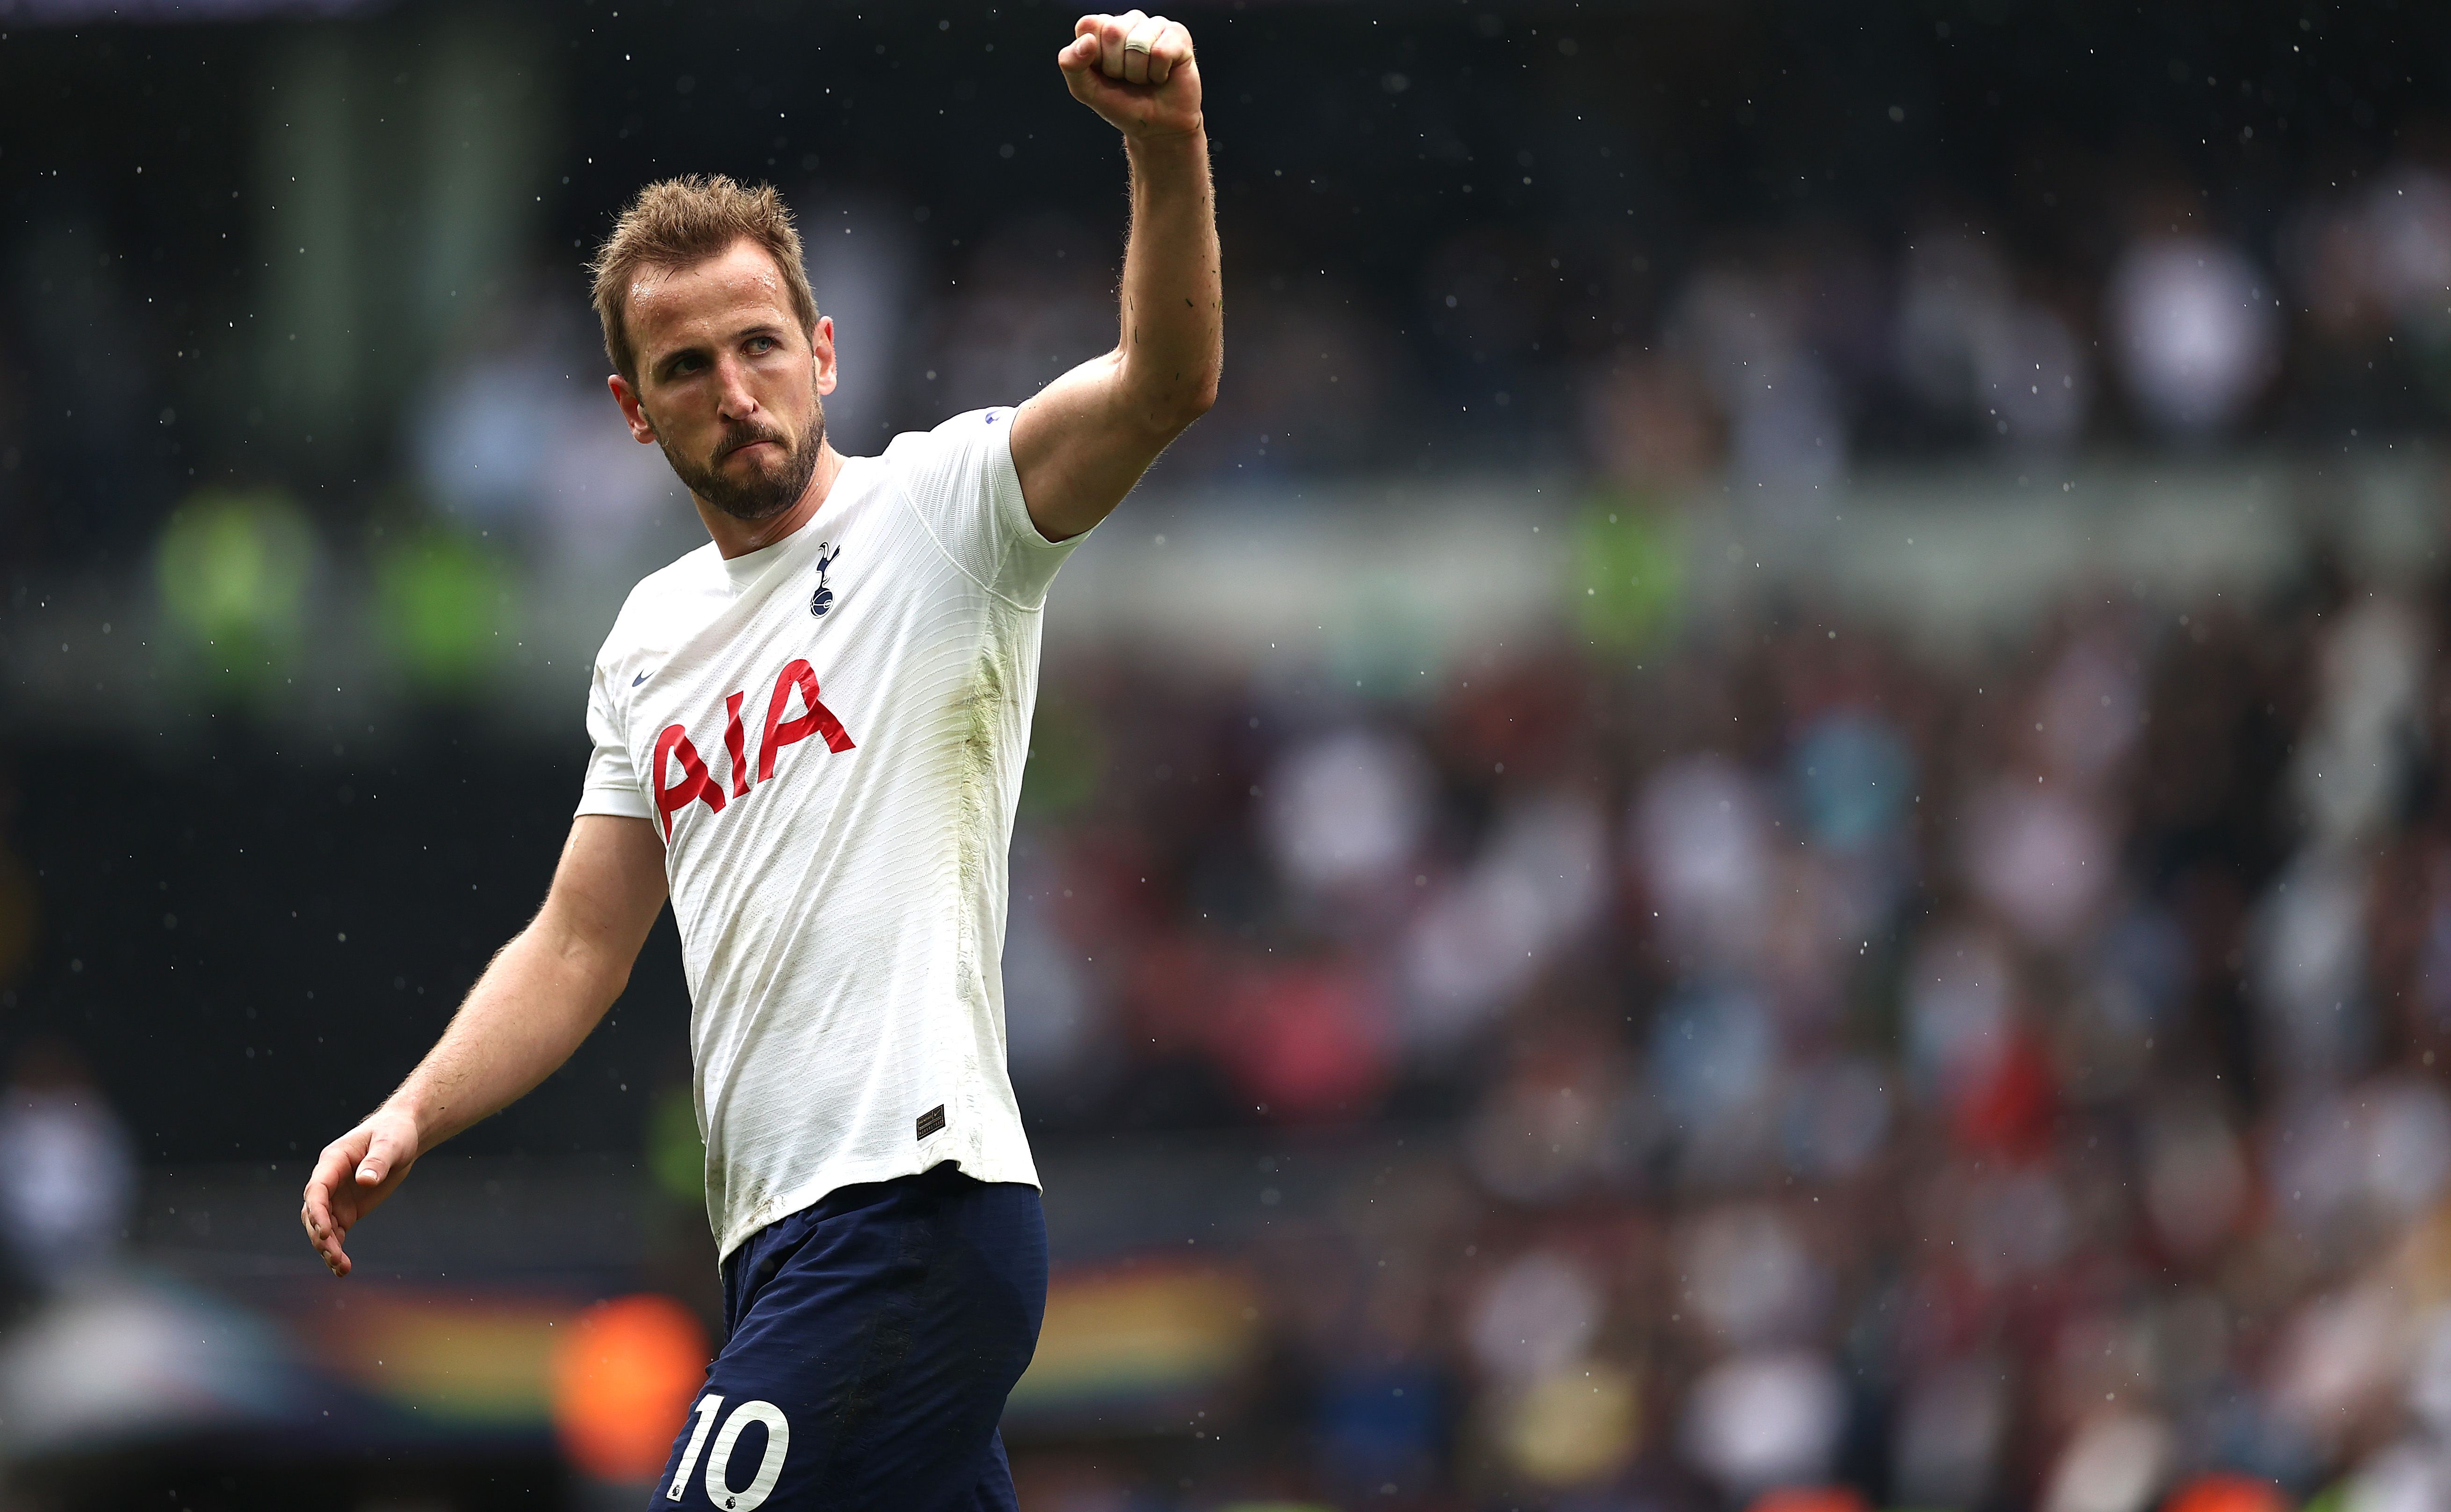 Kane is Tottenham's academy star